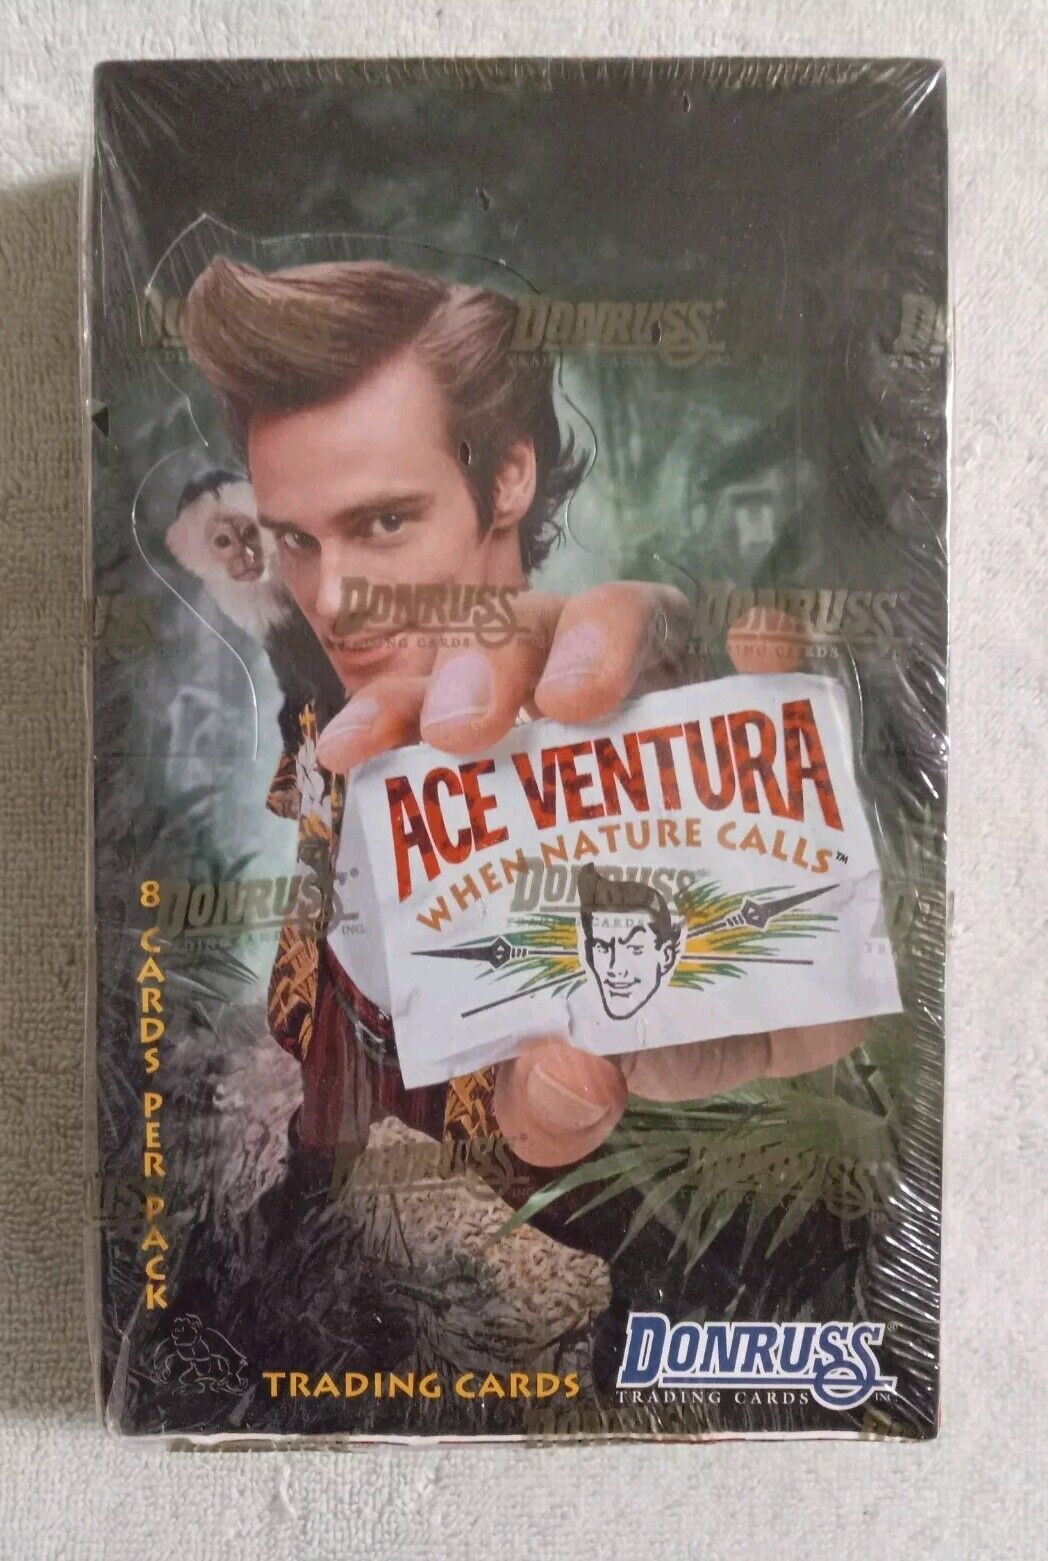 1995 Donruss Ace Ventura When Nature Calls Trading Card Factory Sealed Box